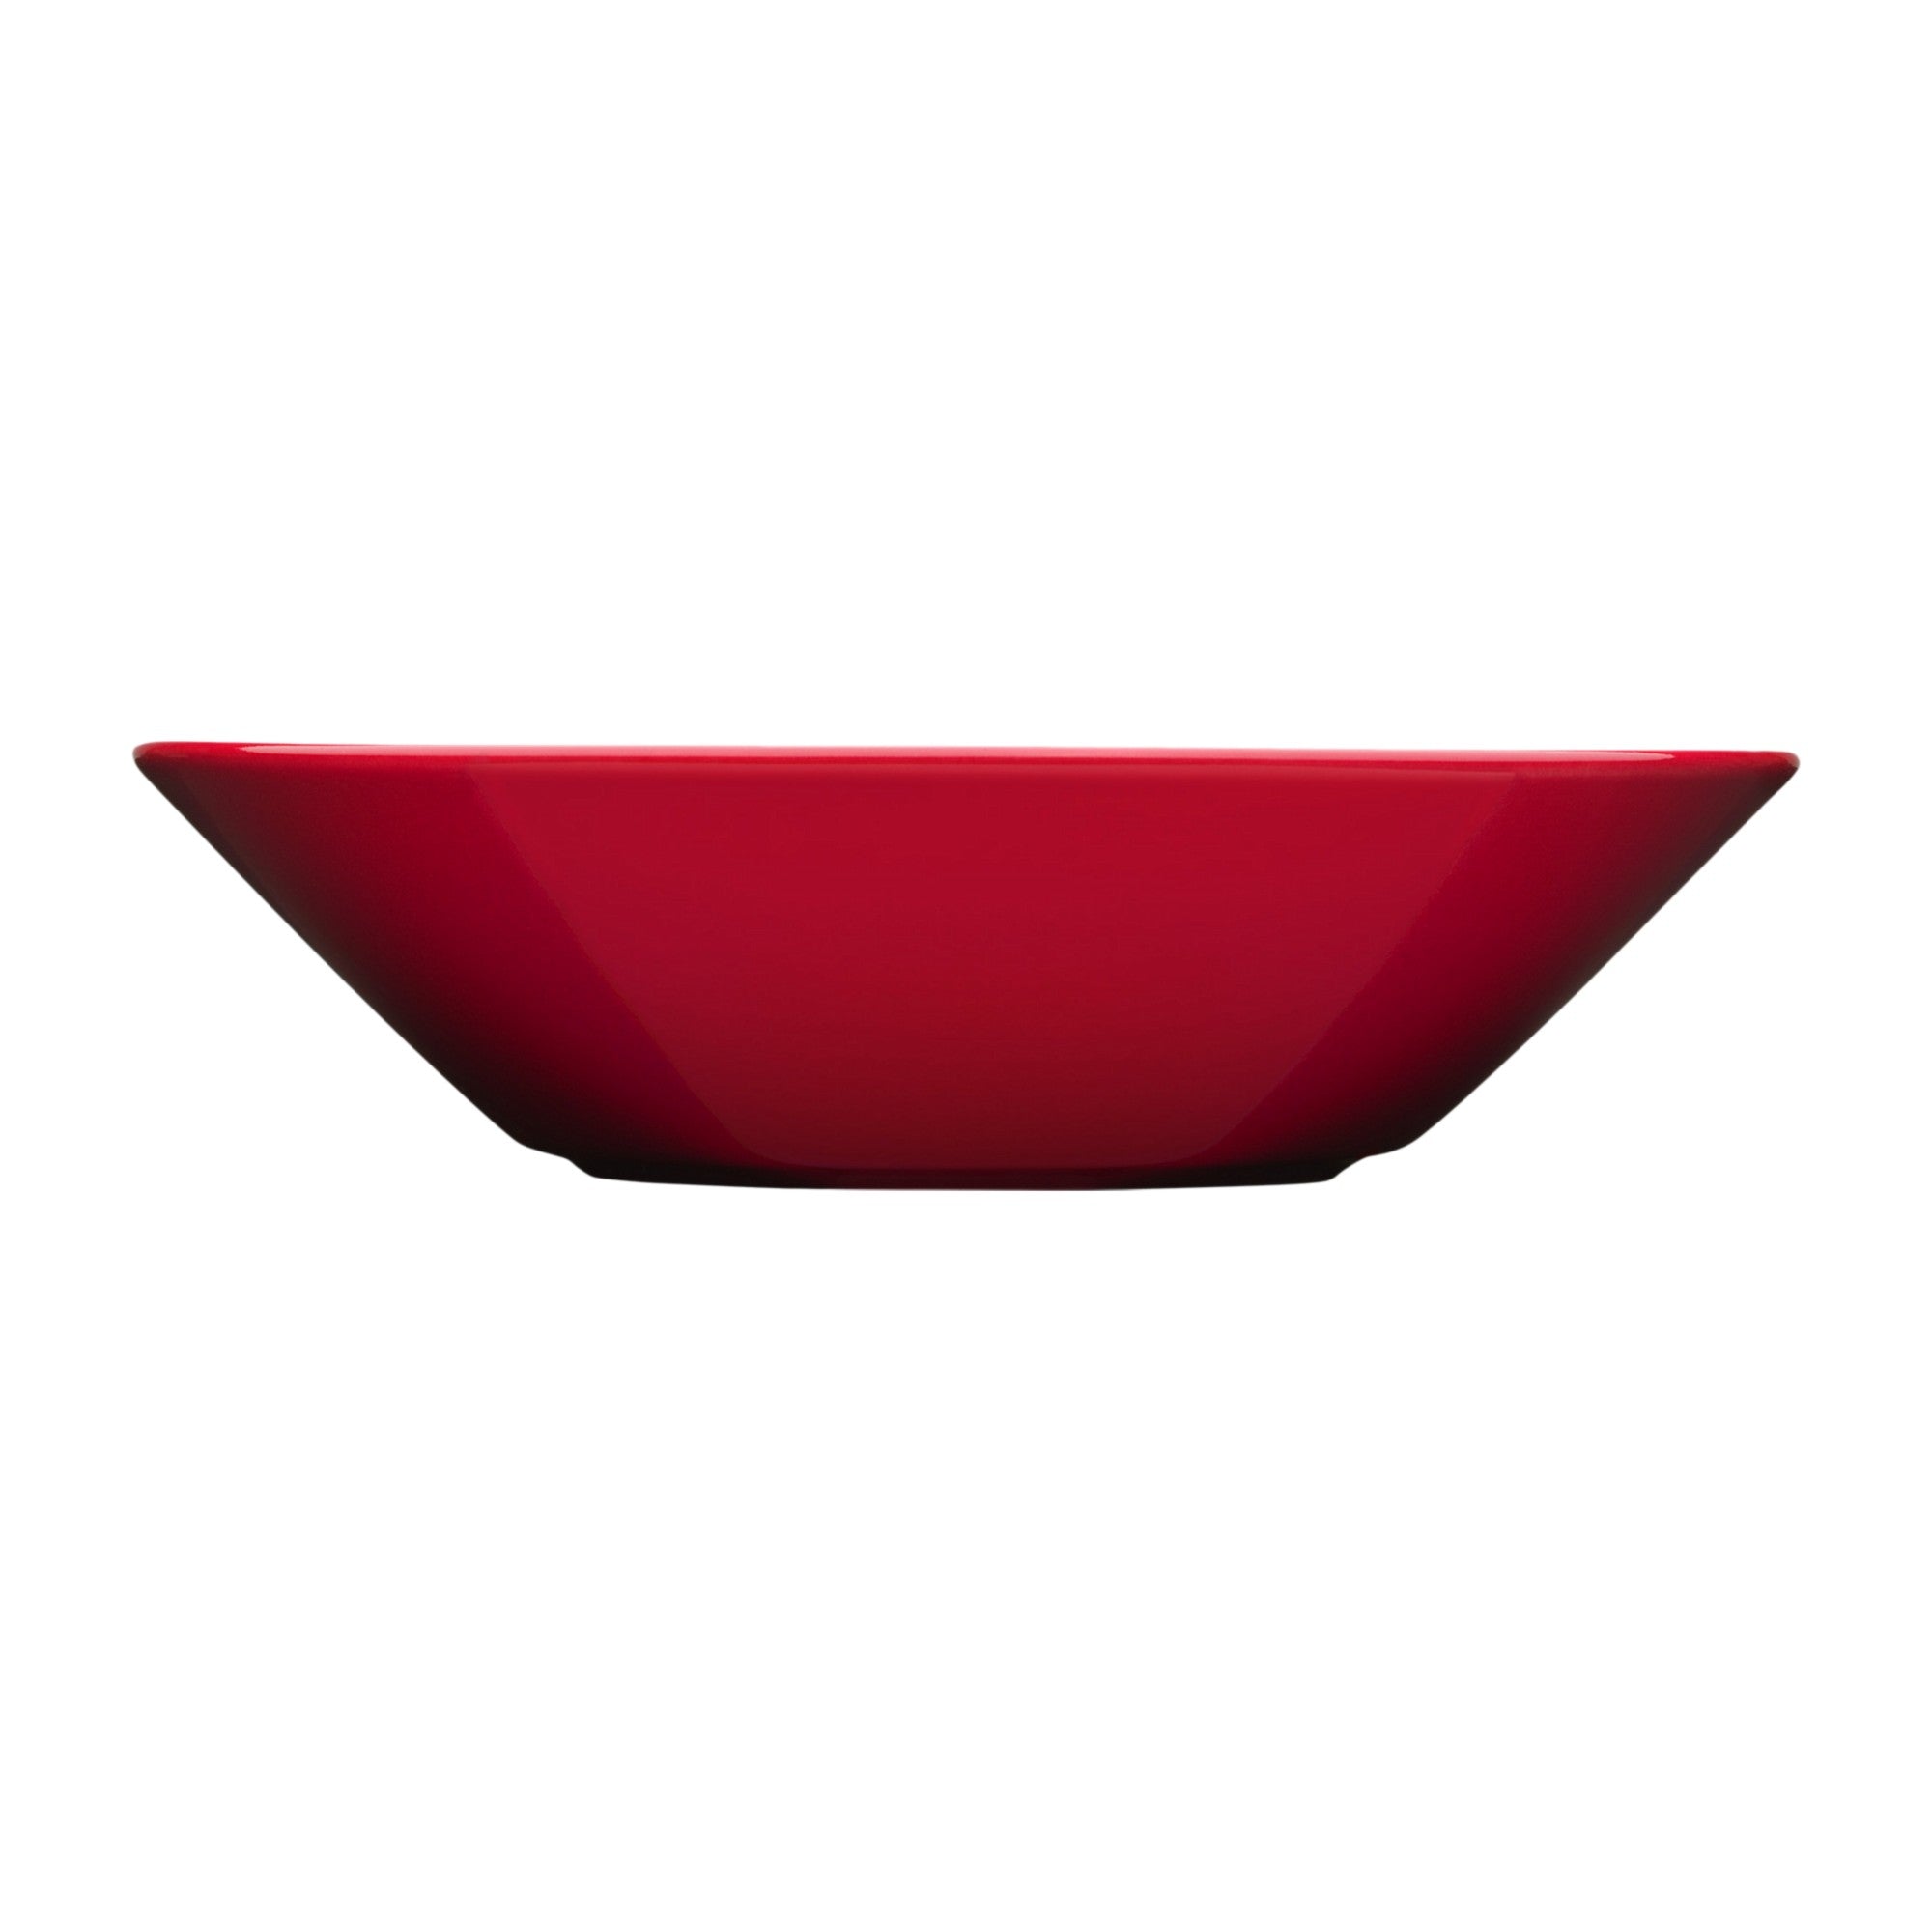 Teema deep plate 21 cm Pasta bowl 8.5" / 29oz